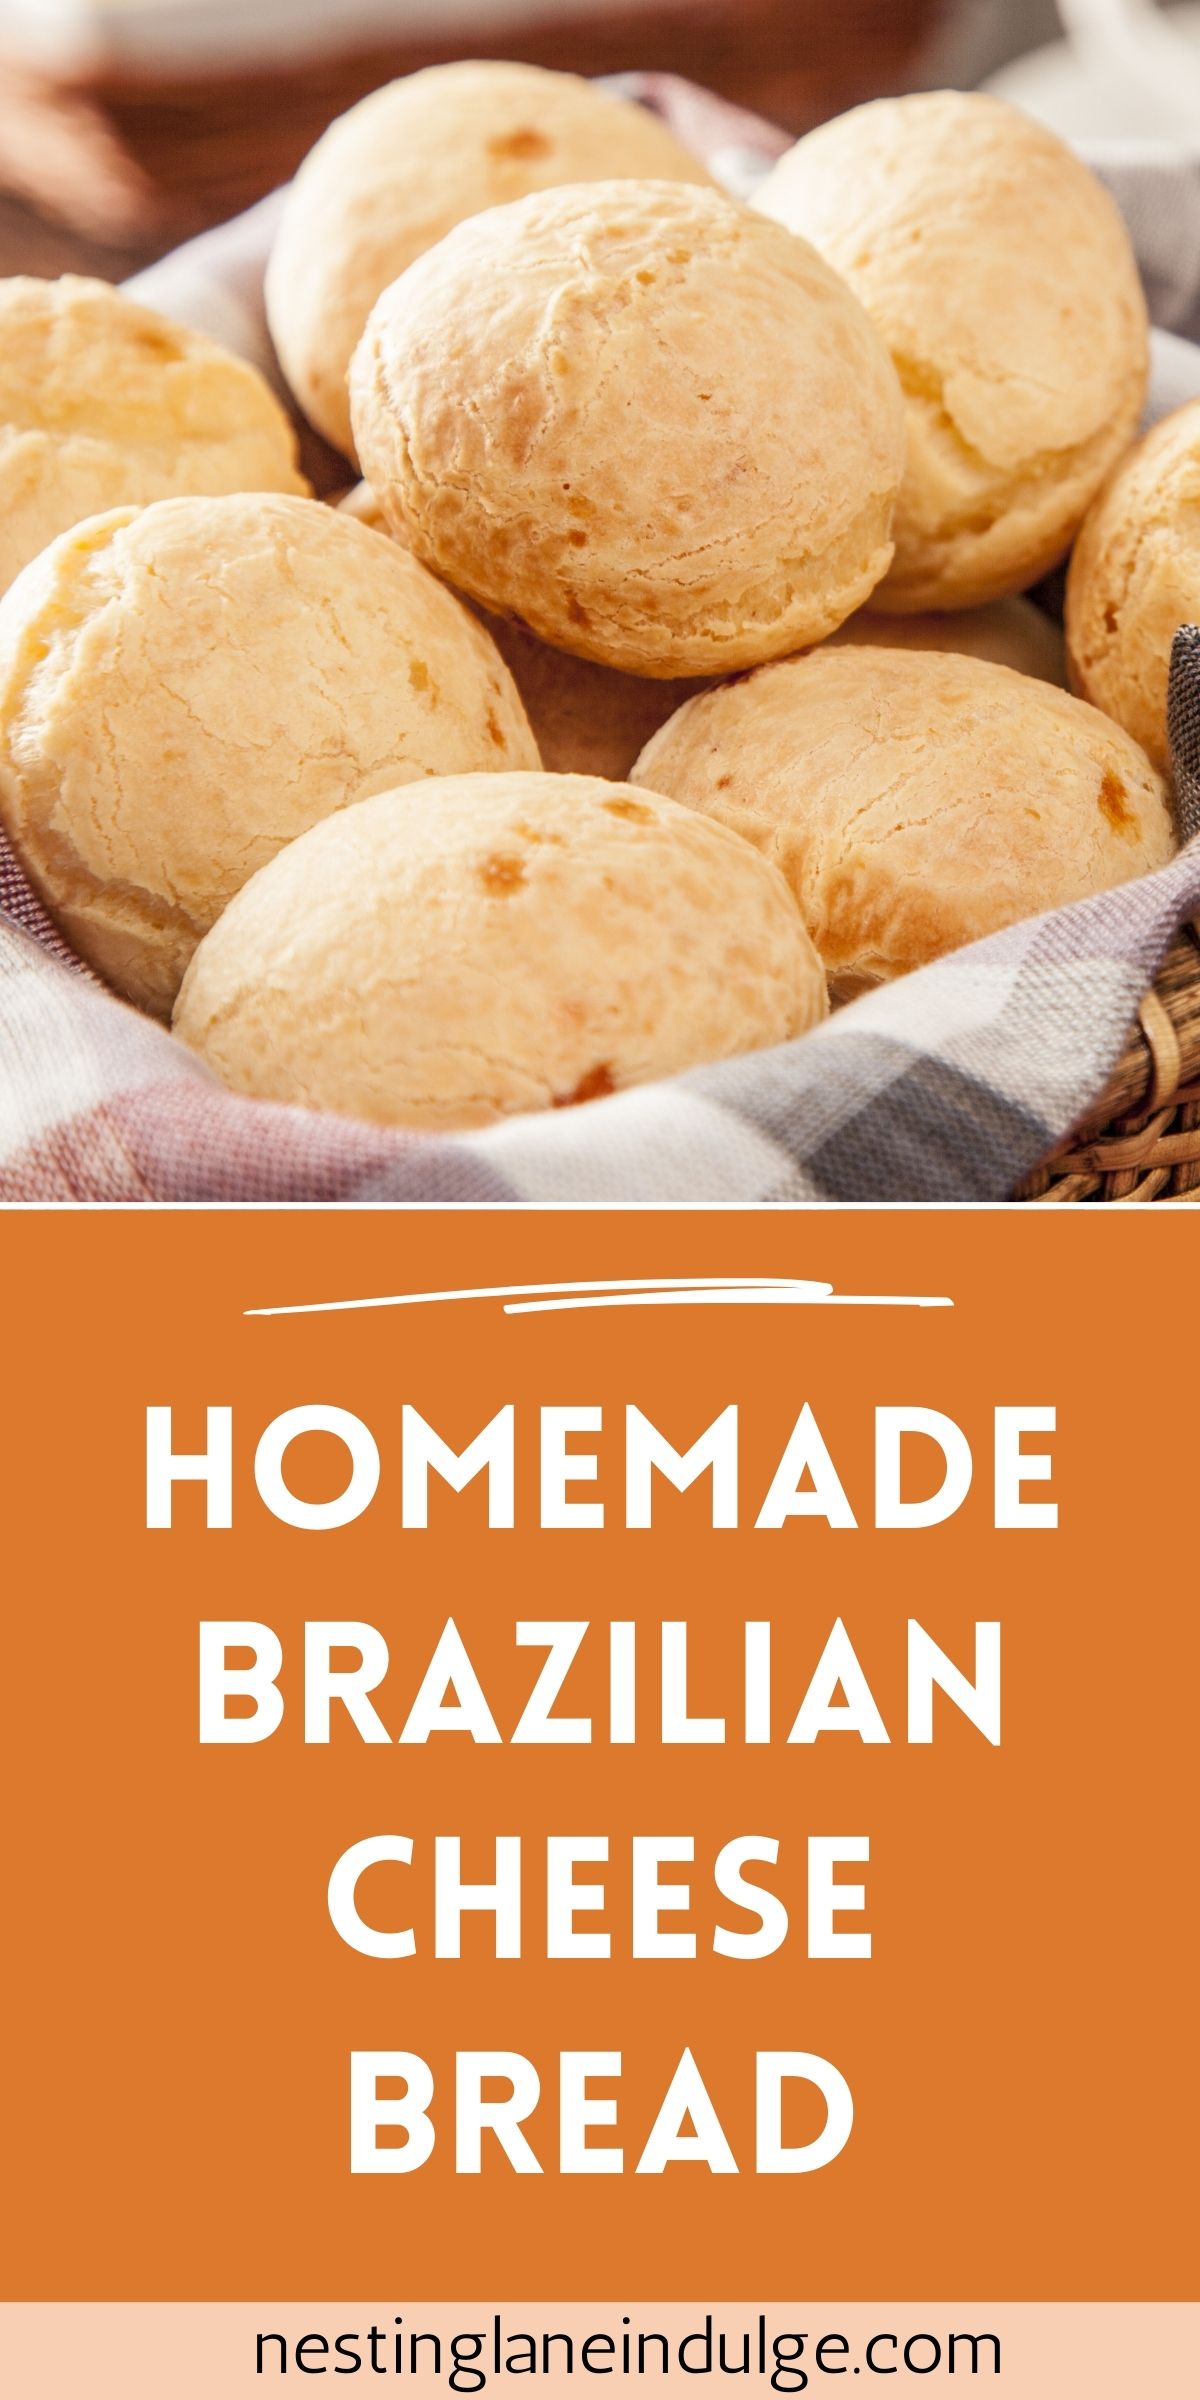 Graphic for Pinterest of Homemade Brazilian Cheese Bread Recipe.